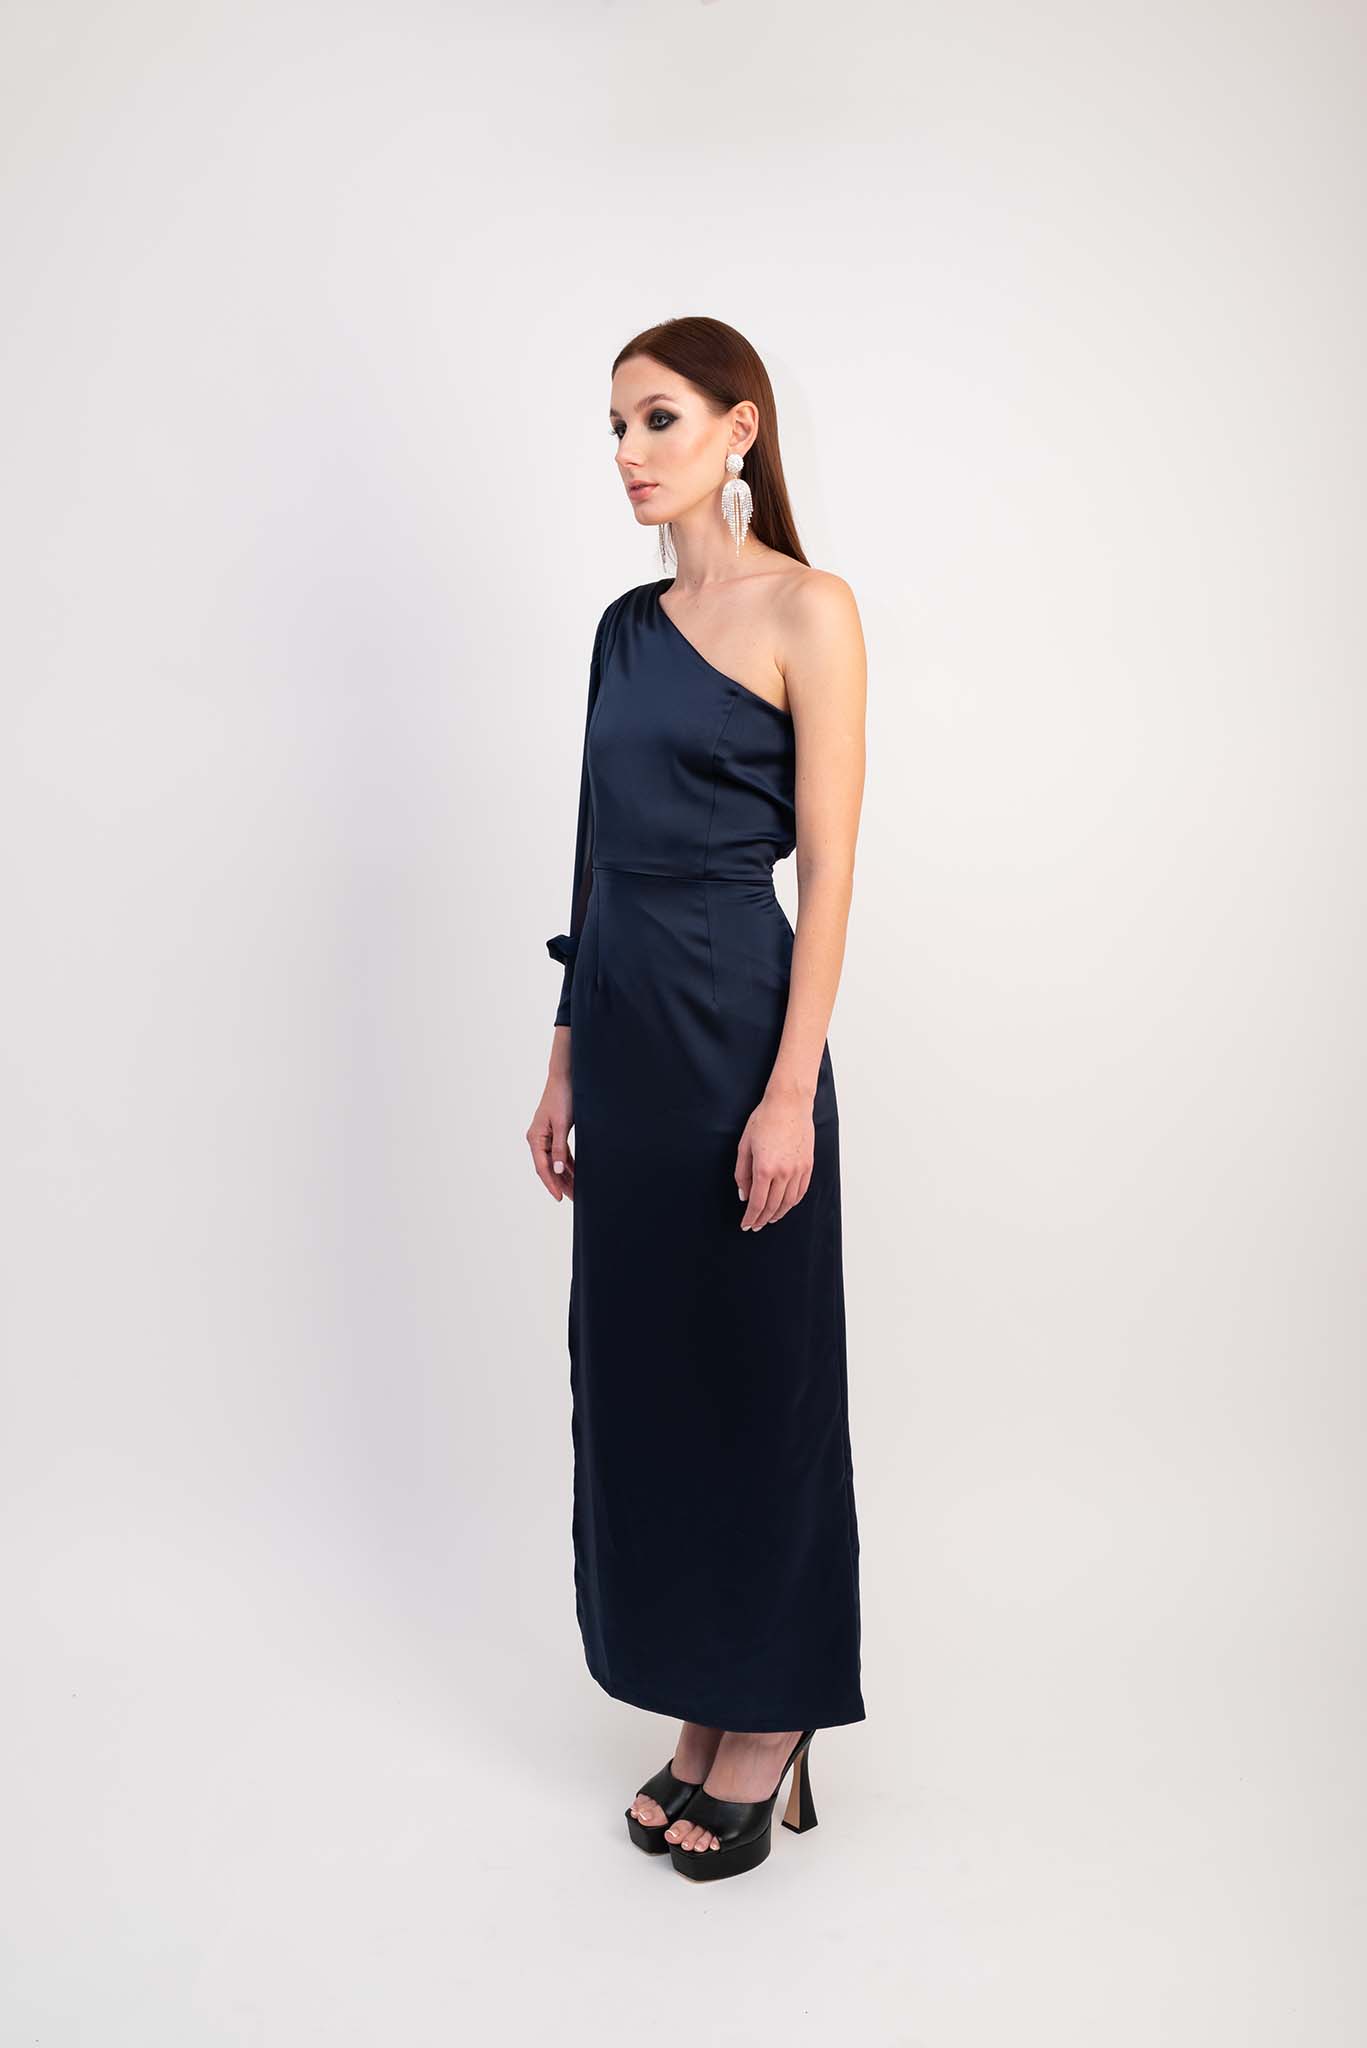 IRA by Irini Charalampous, @irathebrand online shop fashionable ready-to-wear womenswear brand satin dress MARISSA color black high heels Cyprus Greece